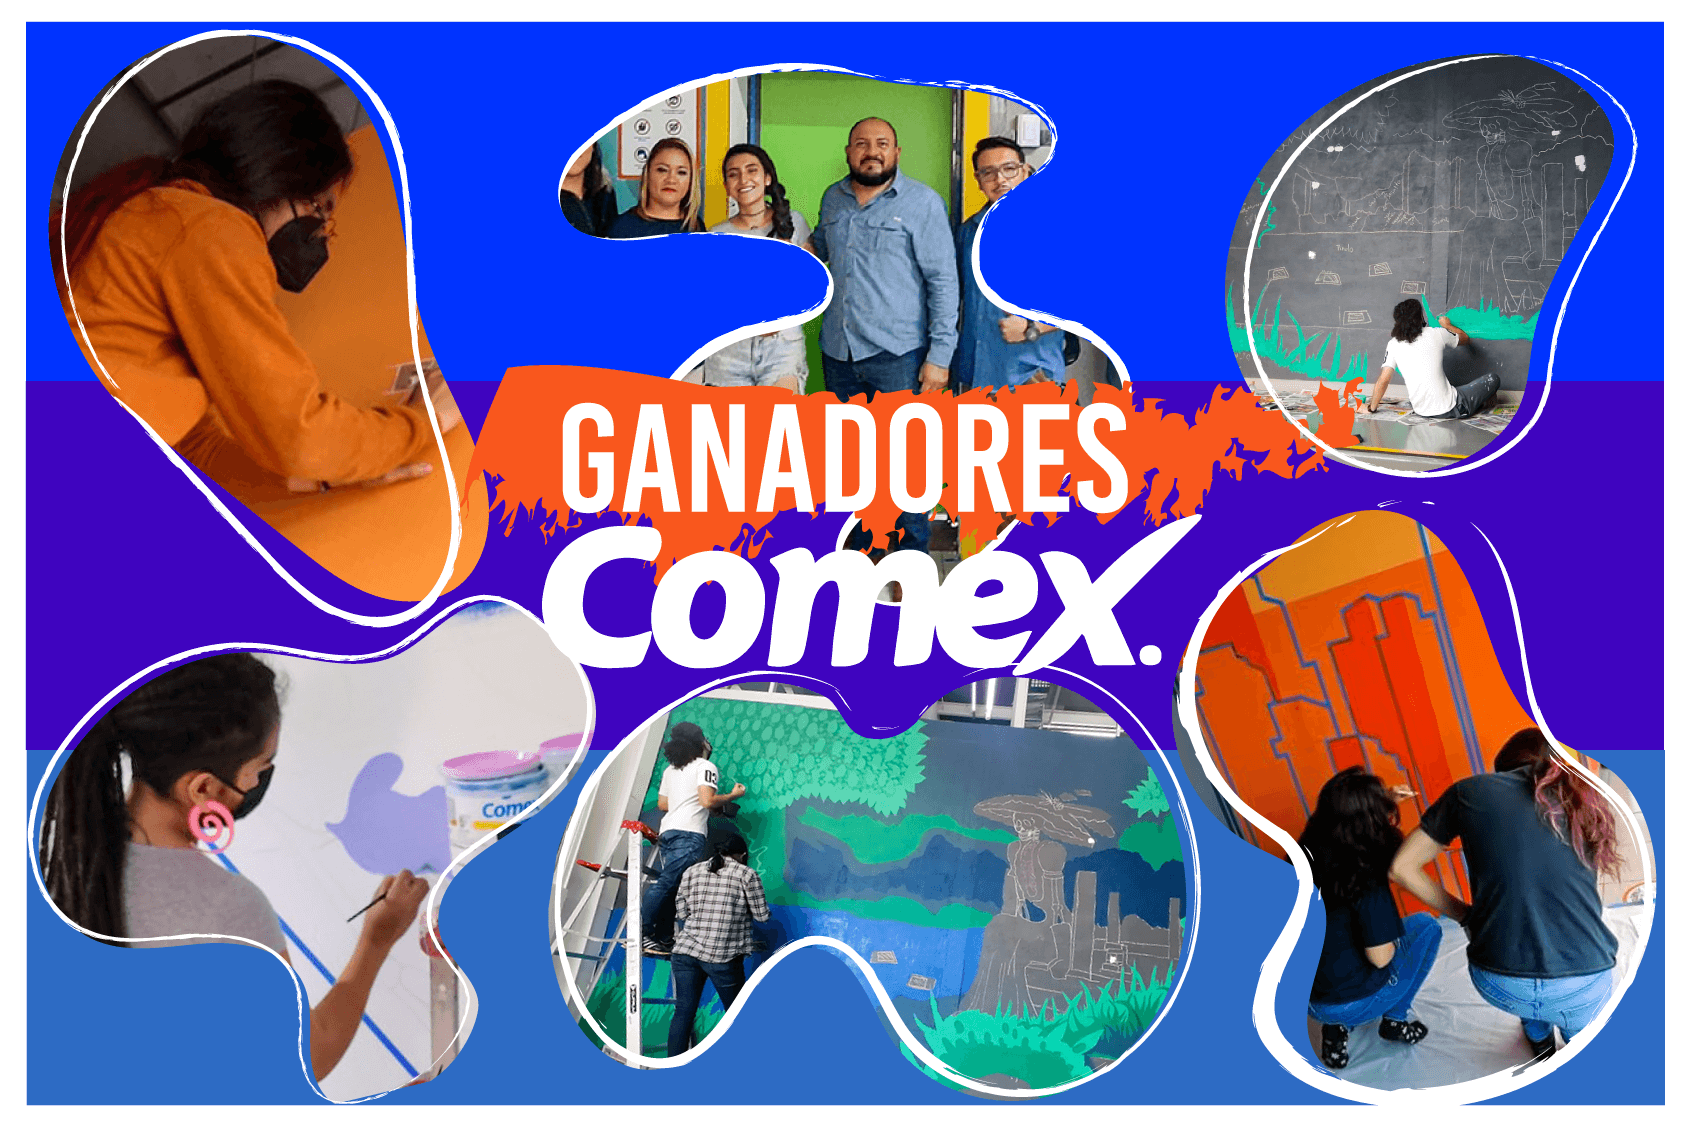 GANADORES COMEX UTC